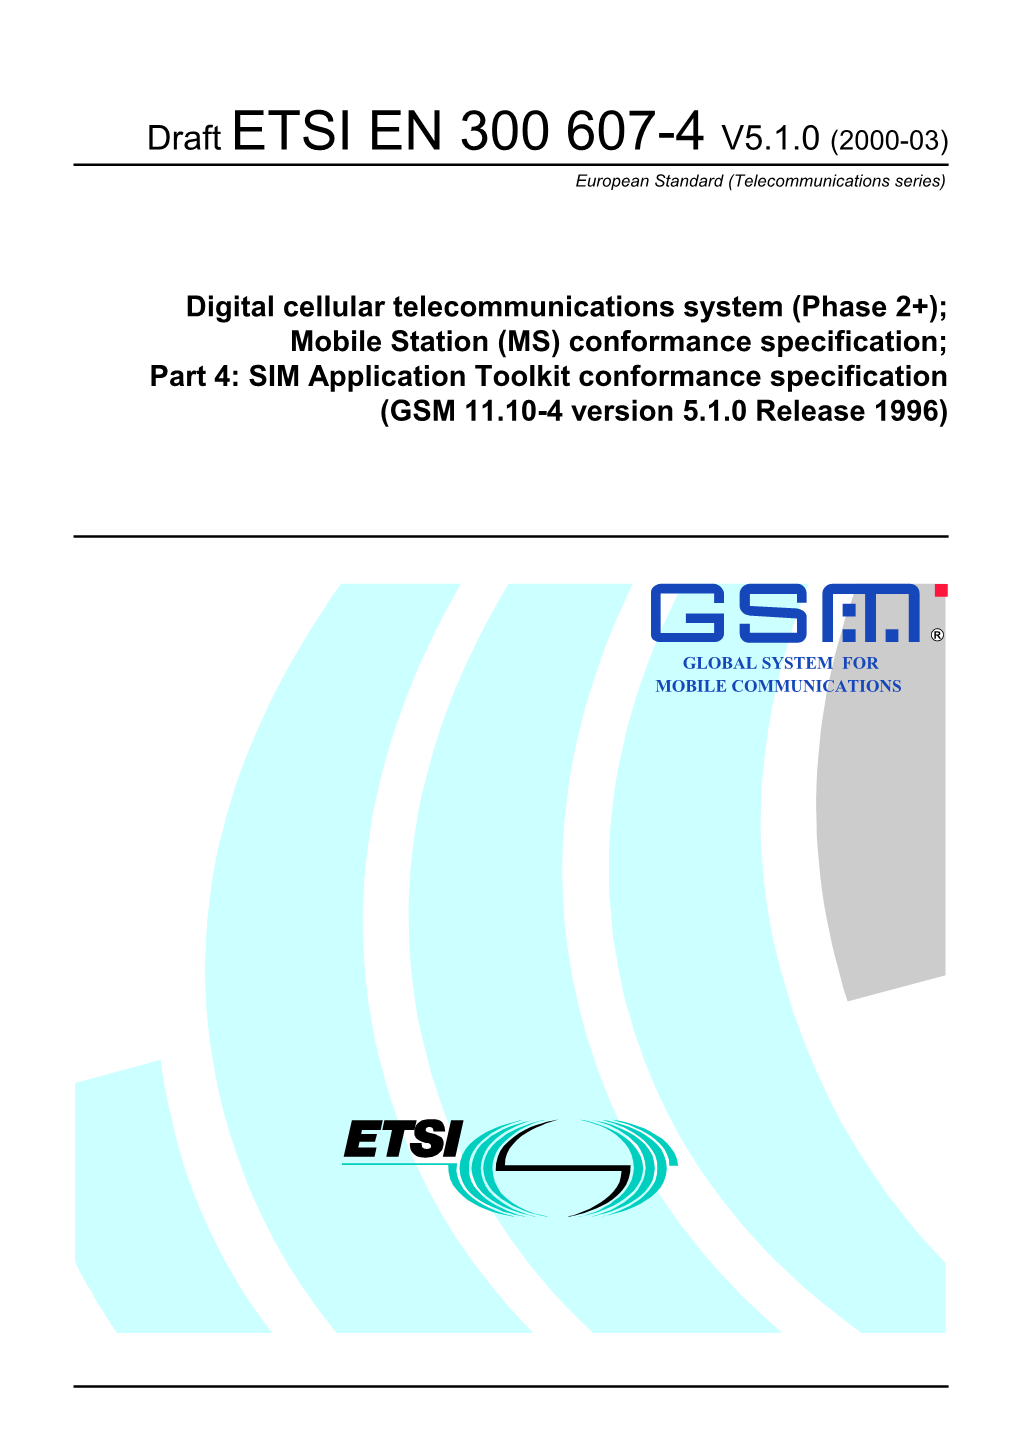 EN 300 607-4 V5.1.0 (2000-03) European Standard (Telecommunications Series)